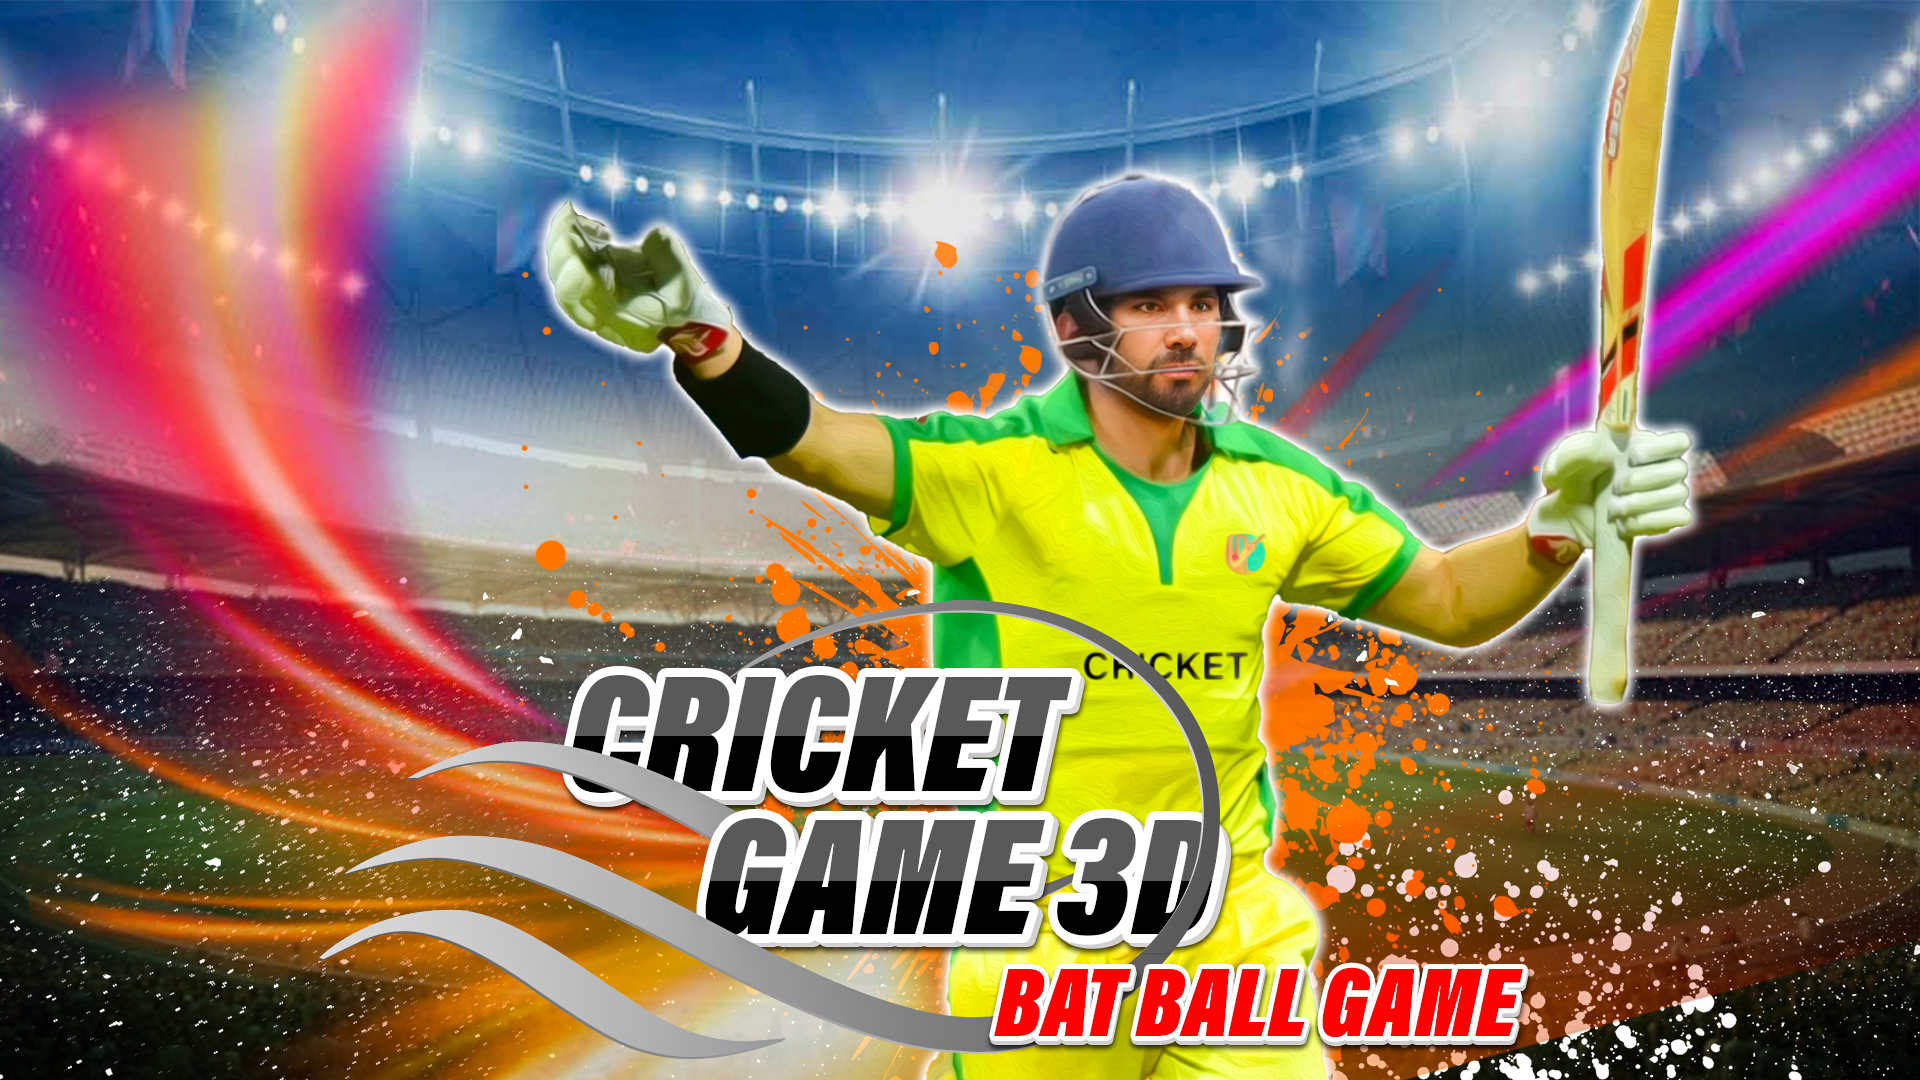 Screenshot 1 of Игра в крикет 3D: игра с мячом 1.1.1